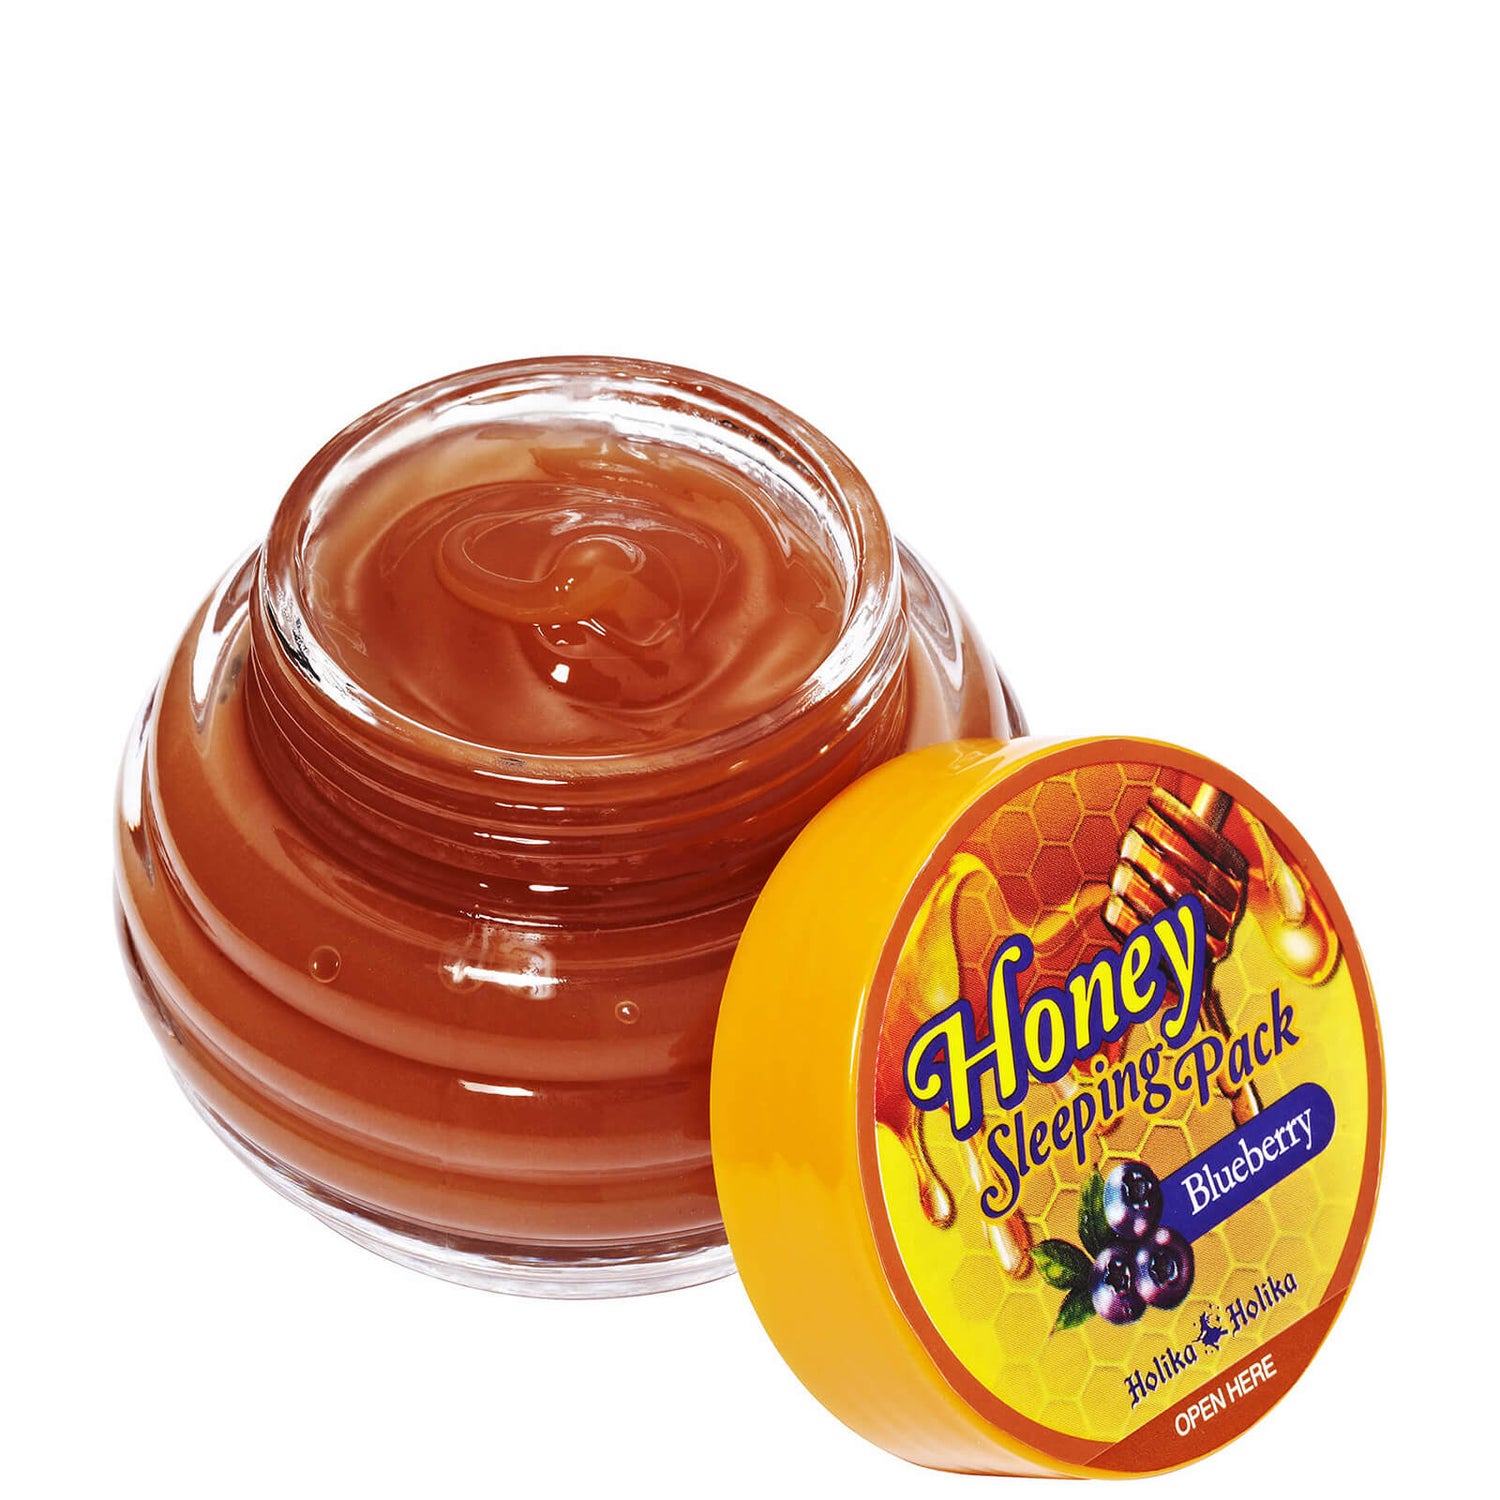 Holika Holika Honey Sleeping Pack Blueberry(홀리카 홀리카 허니 슬리핑 팩, 블루베리)